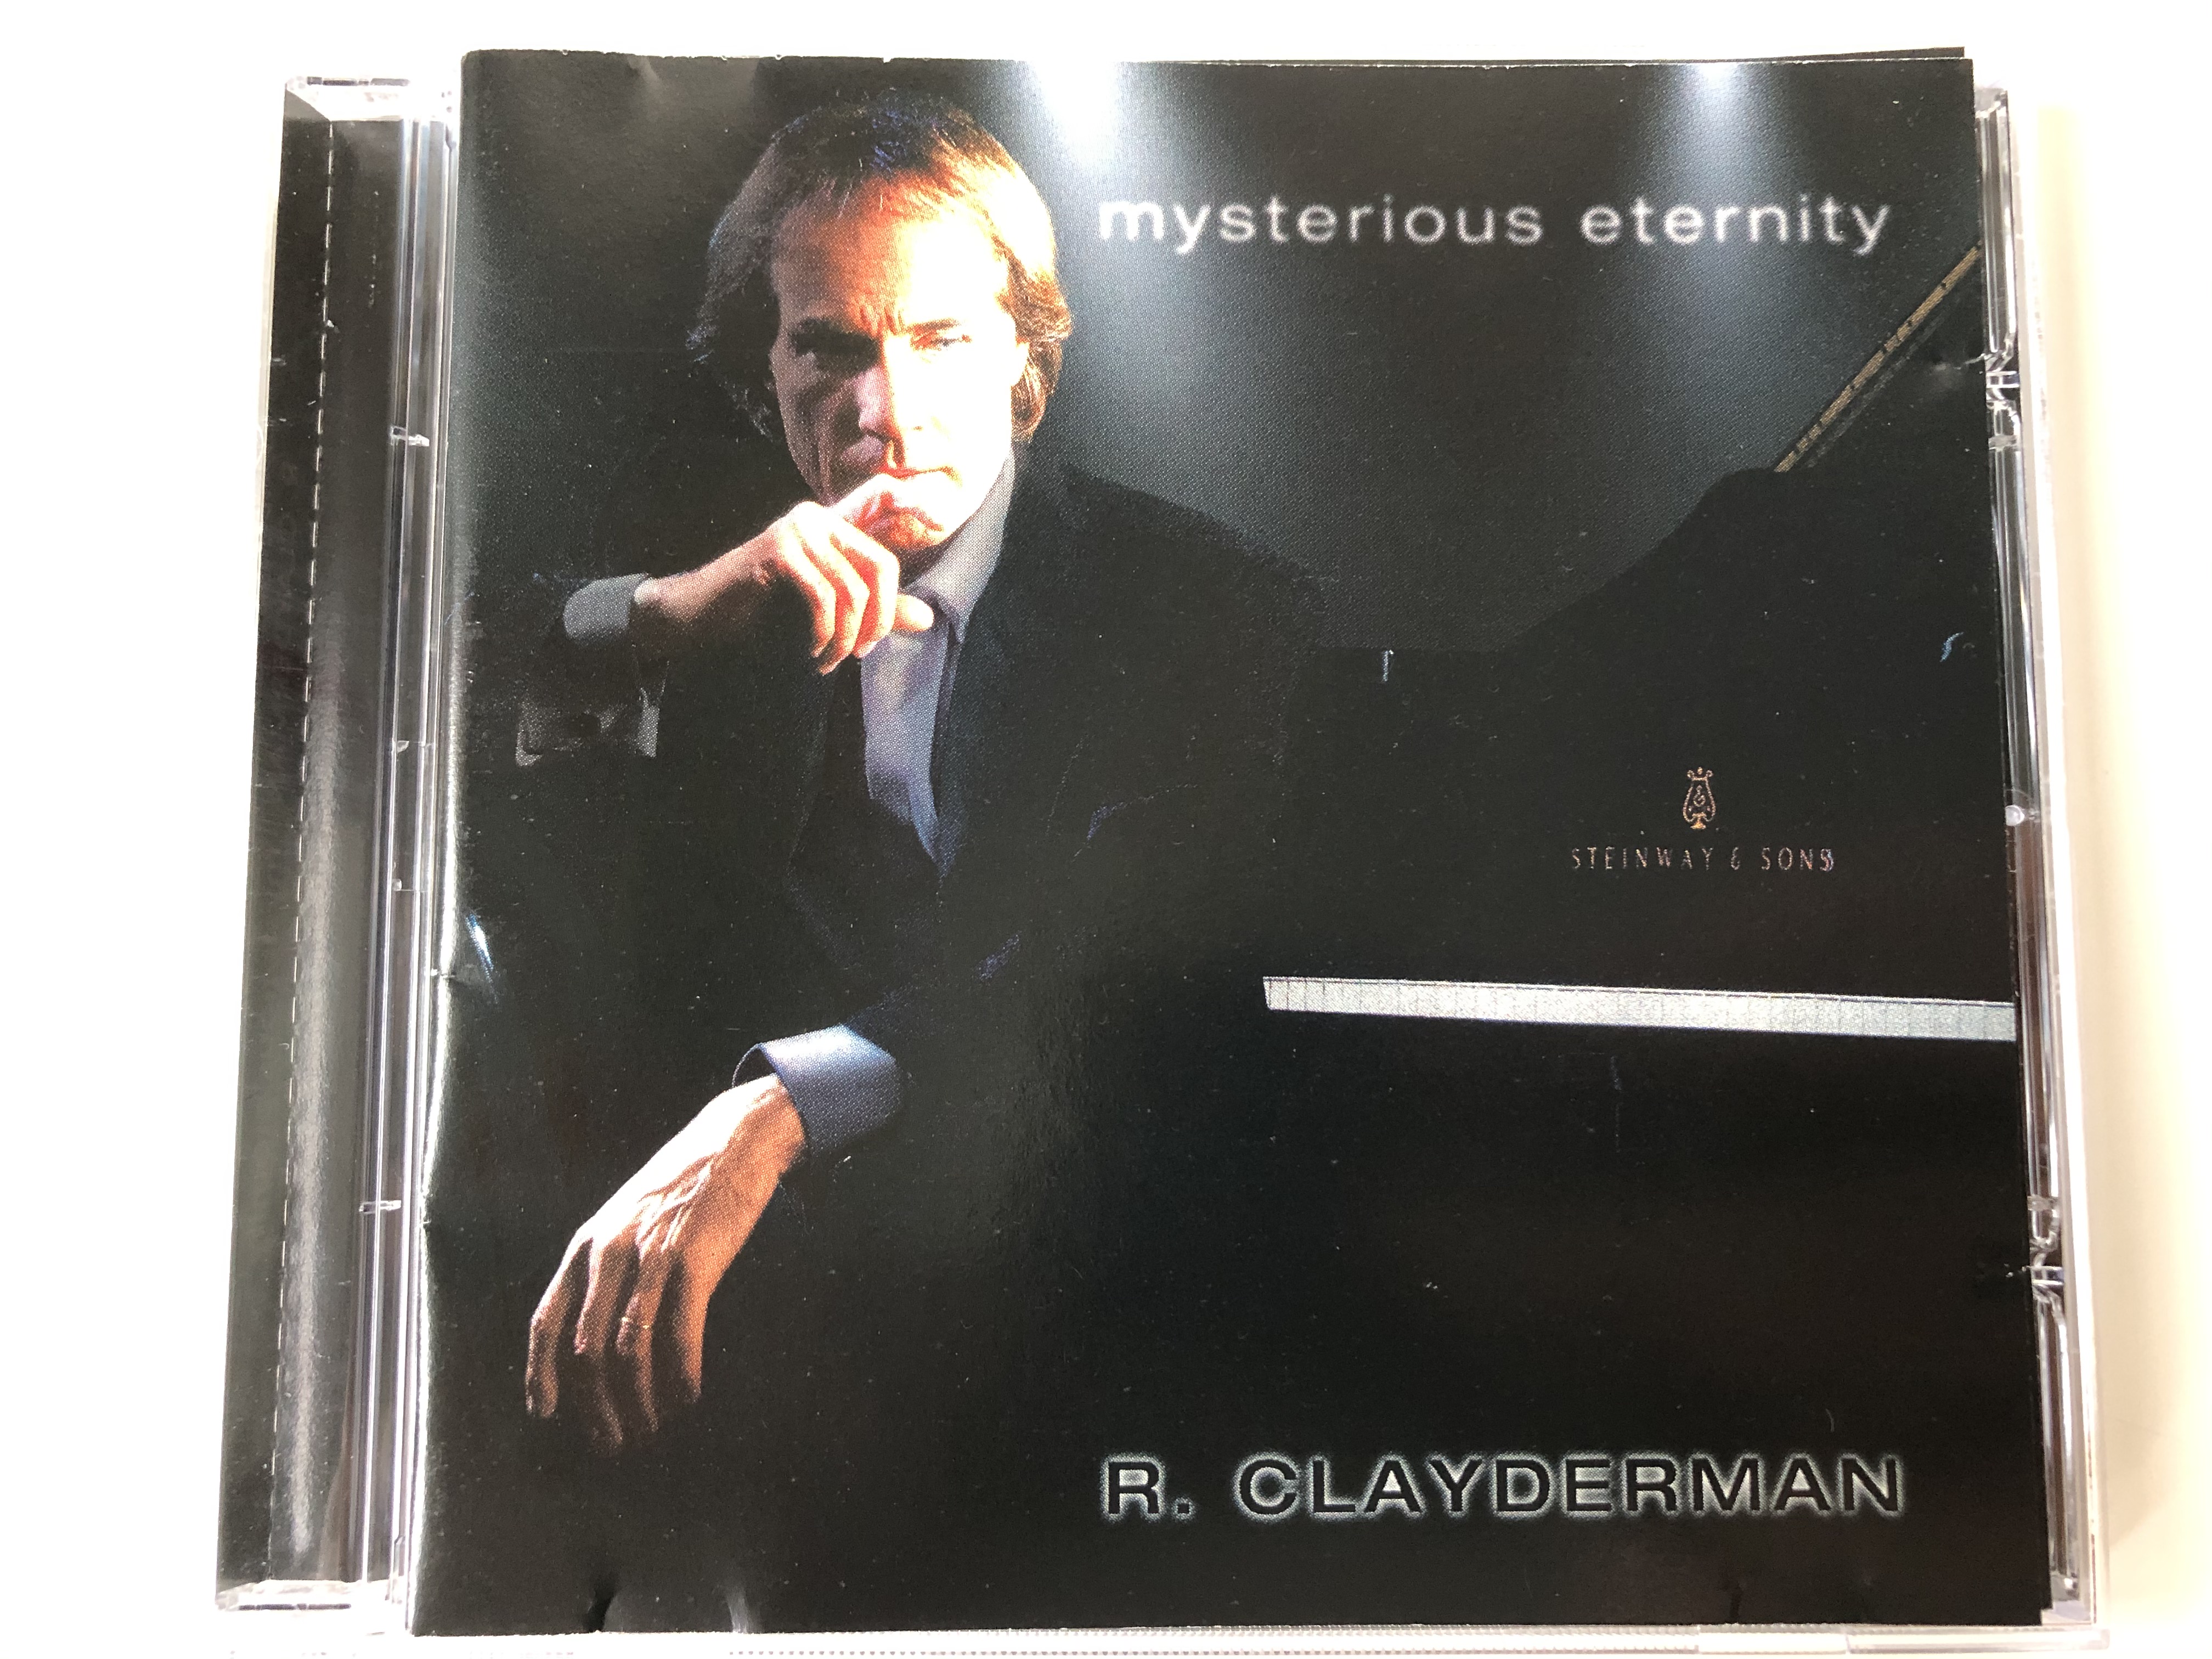 mysterious-eternity-r.-clayderman-delphine-productions-audio-cd-2001-068-507-2-1-.jpg